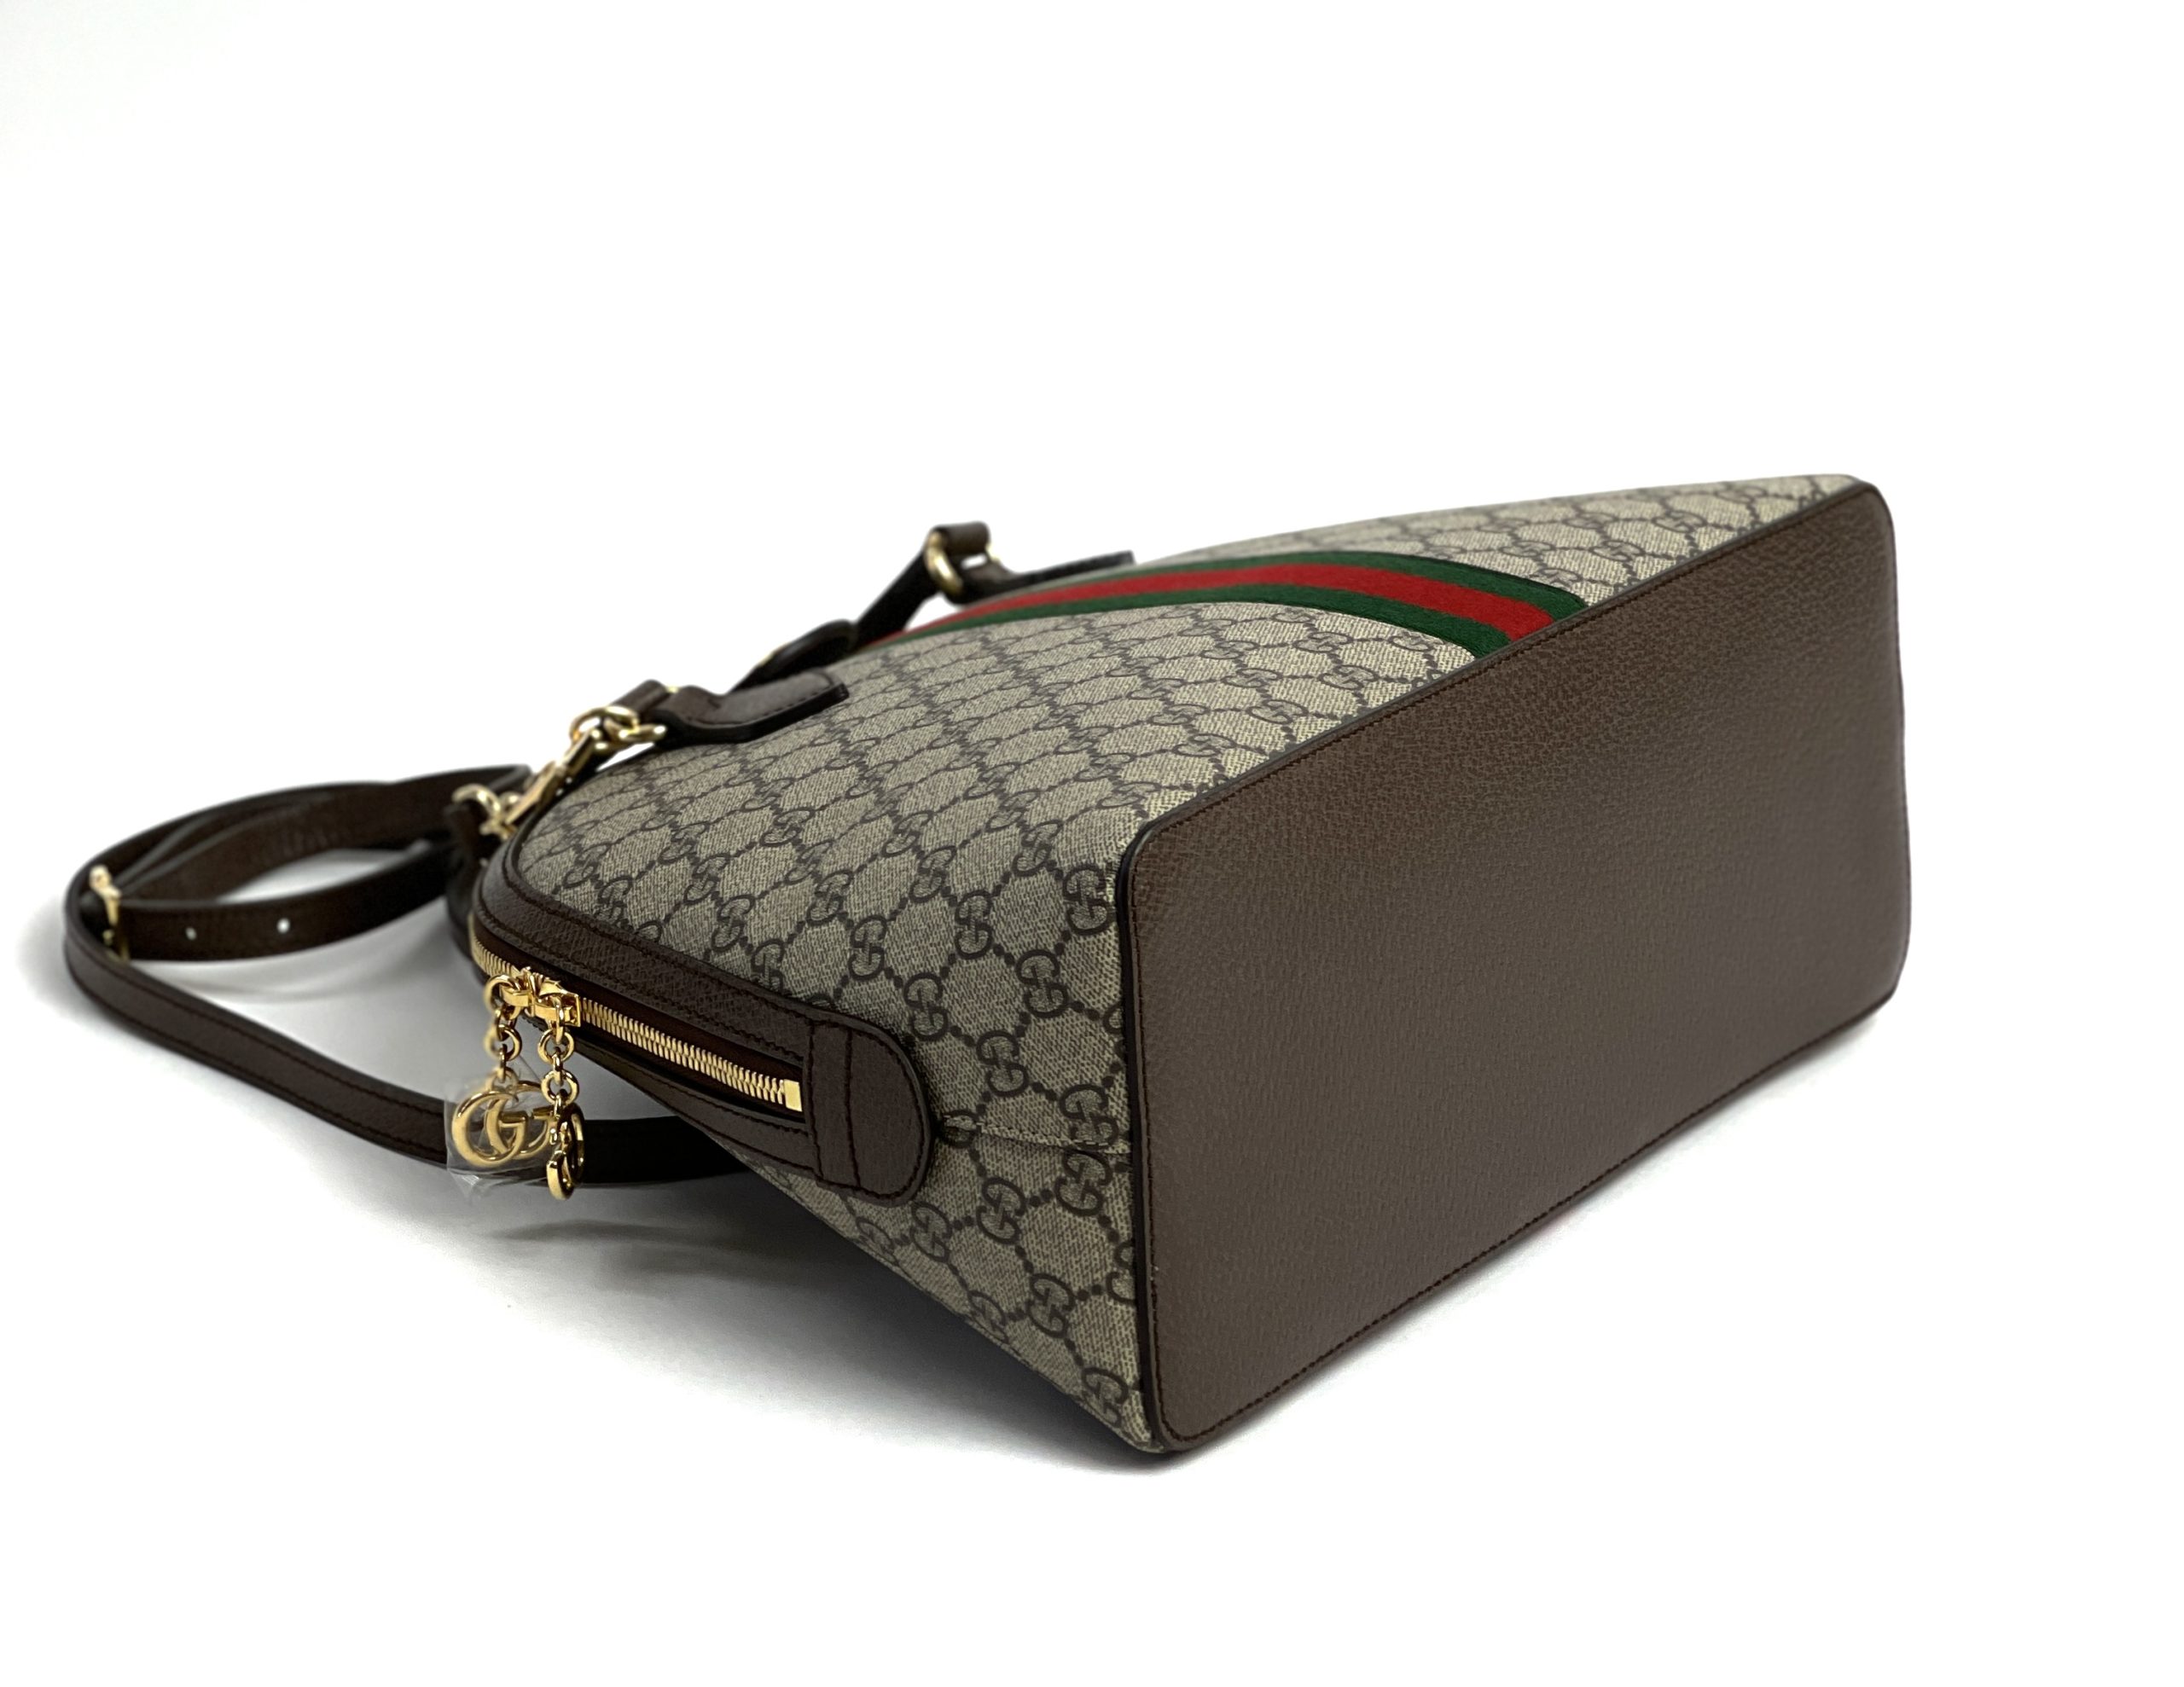 Gucci Small GG Supreme Ophidia Dome Shoulder Bag 